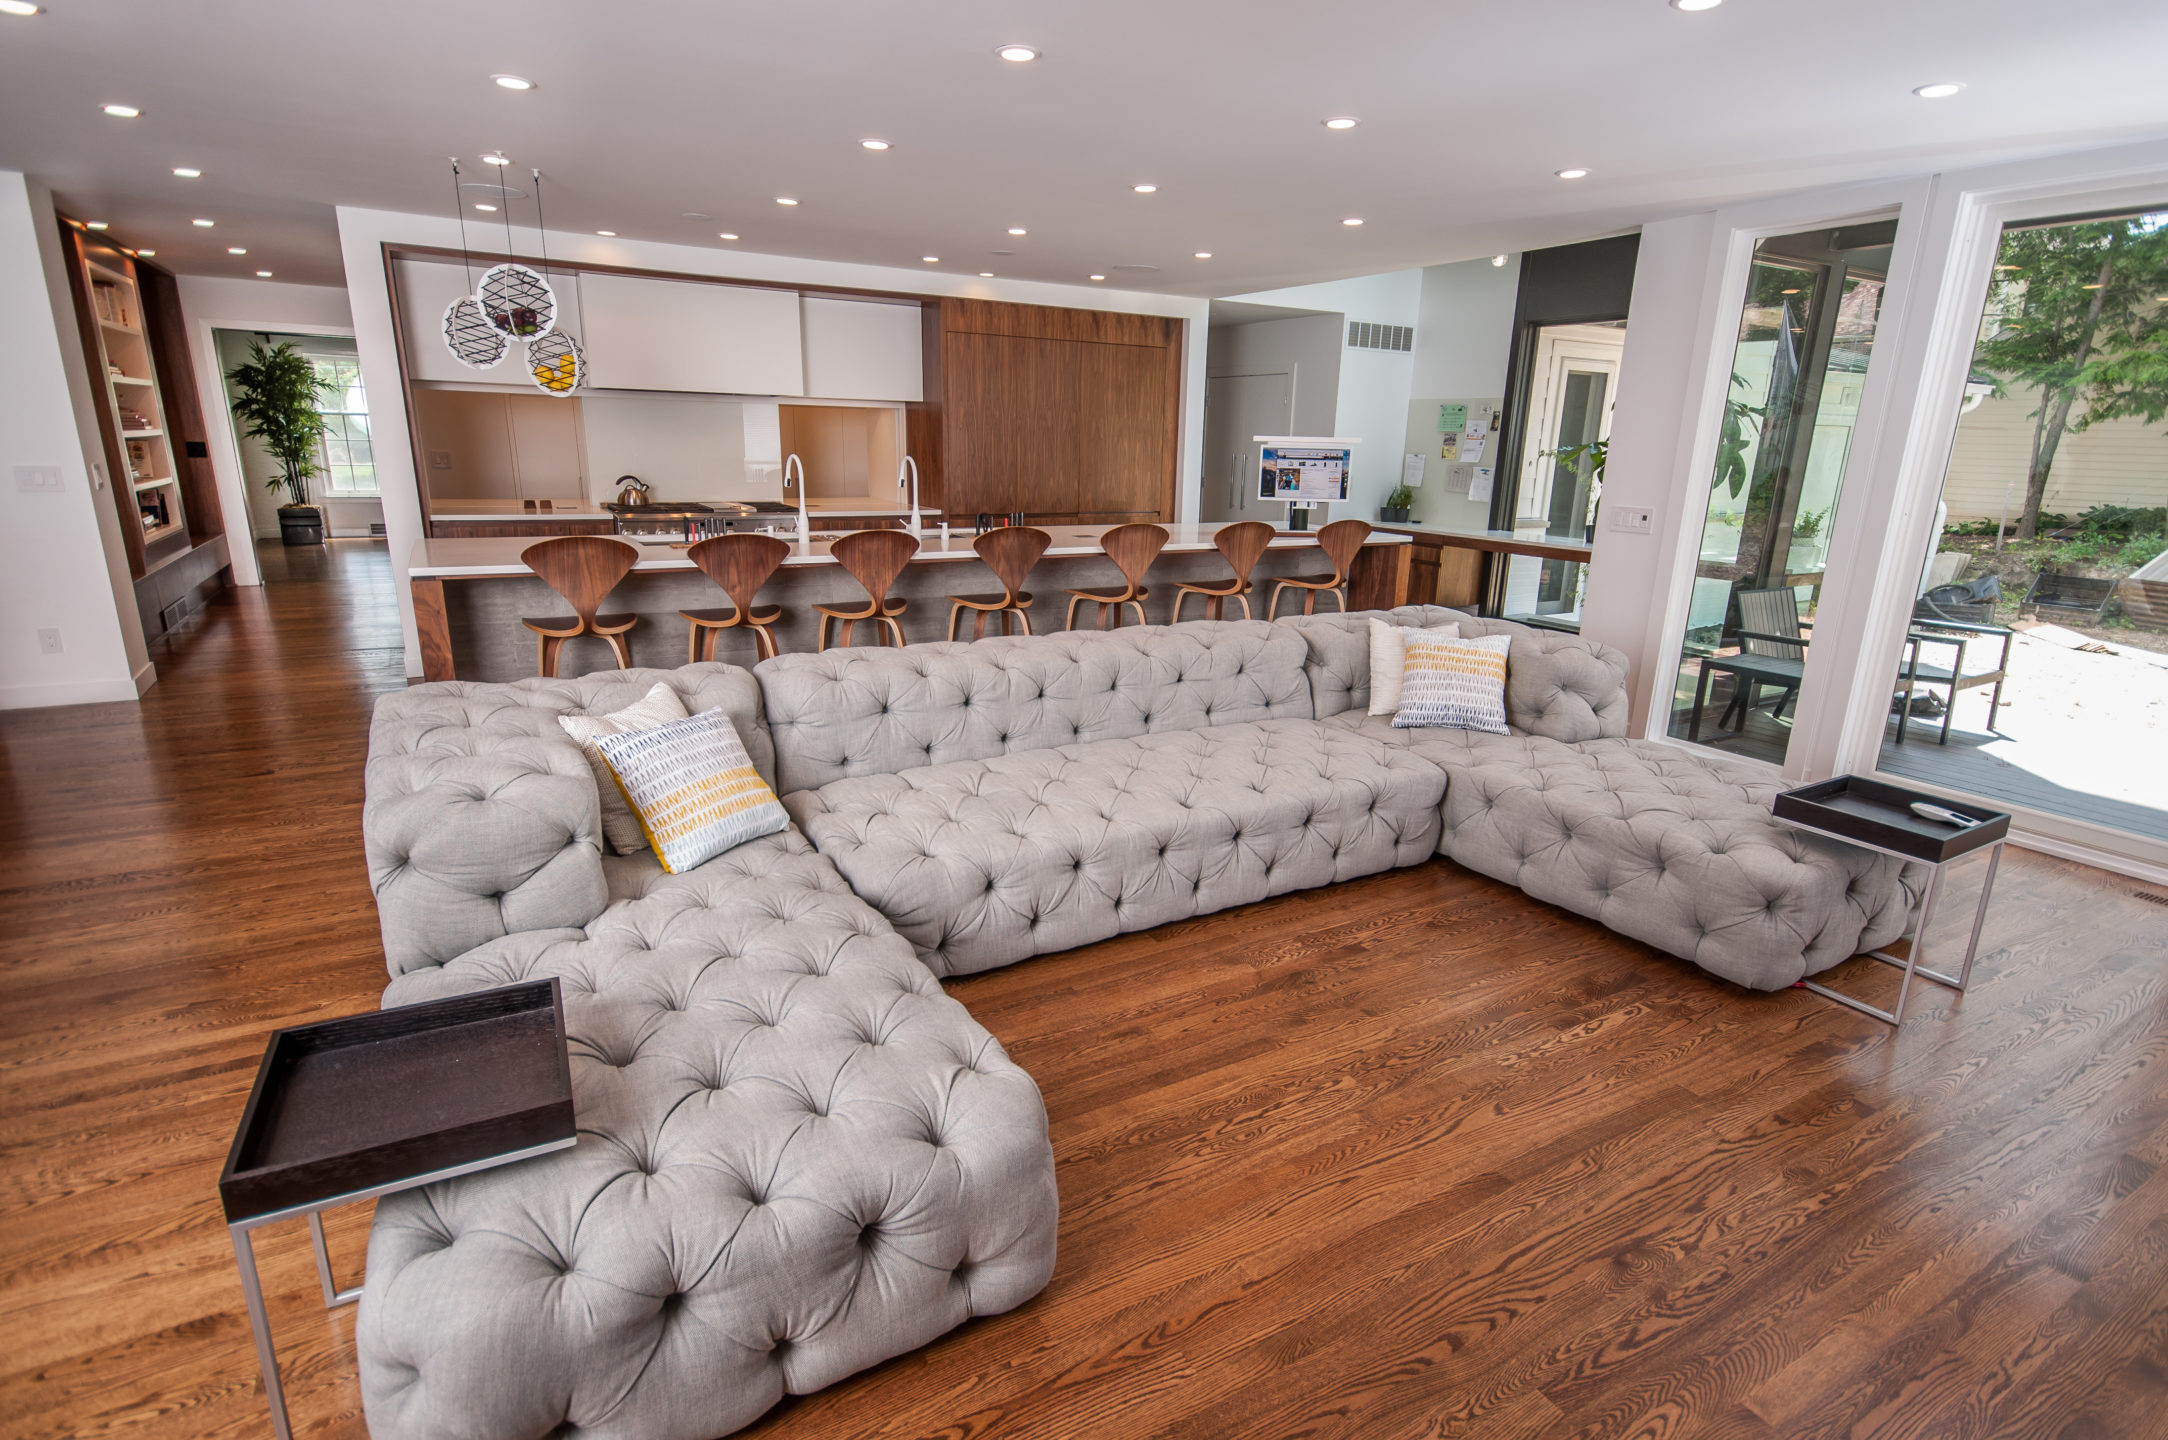 evergreen-portfolio-kensington-modern-revival-interior-LR-living-room-wide-couch-kitchen-barstools